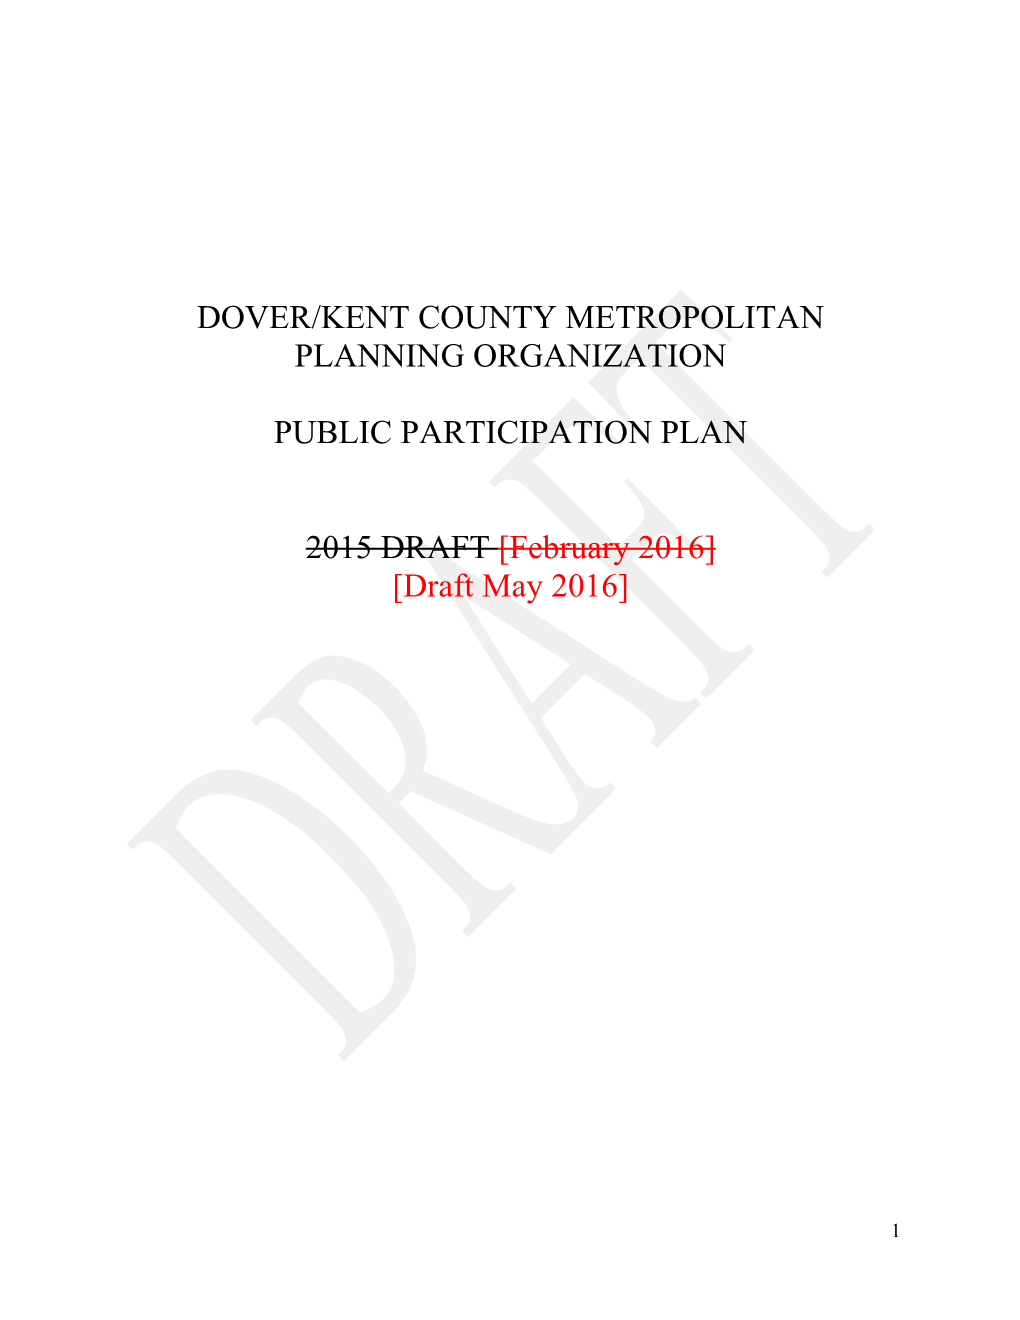 Dover/Kent County Metropolitan Planning Organization